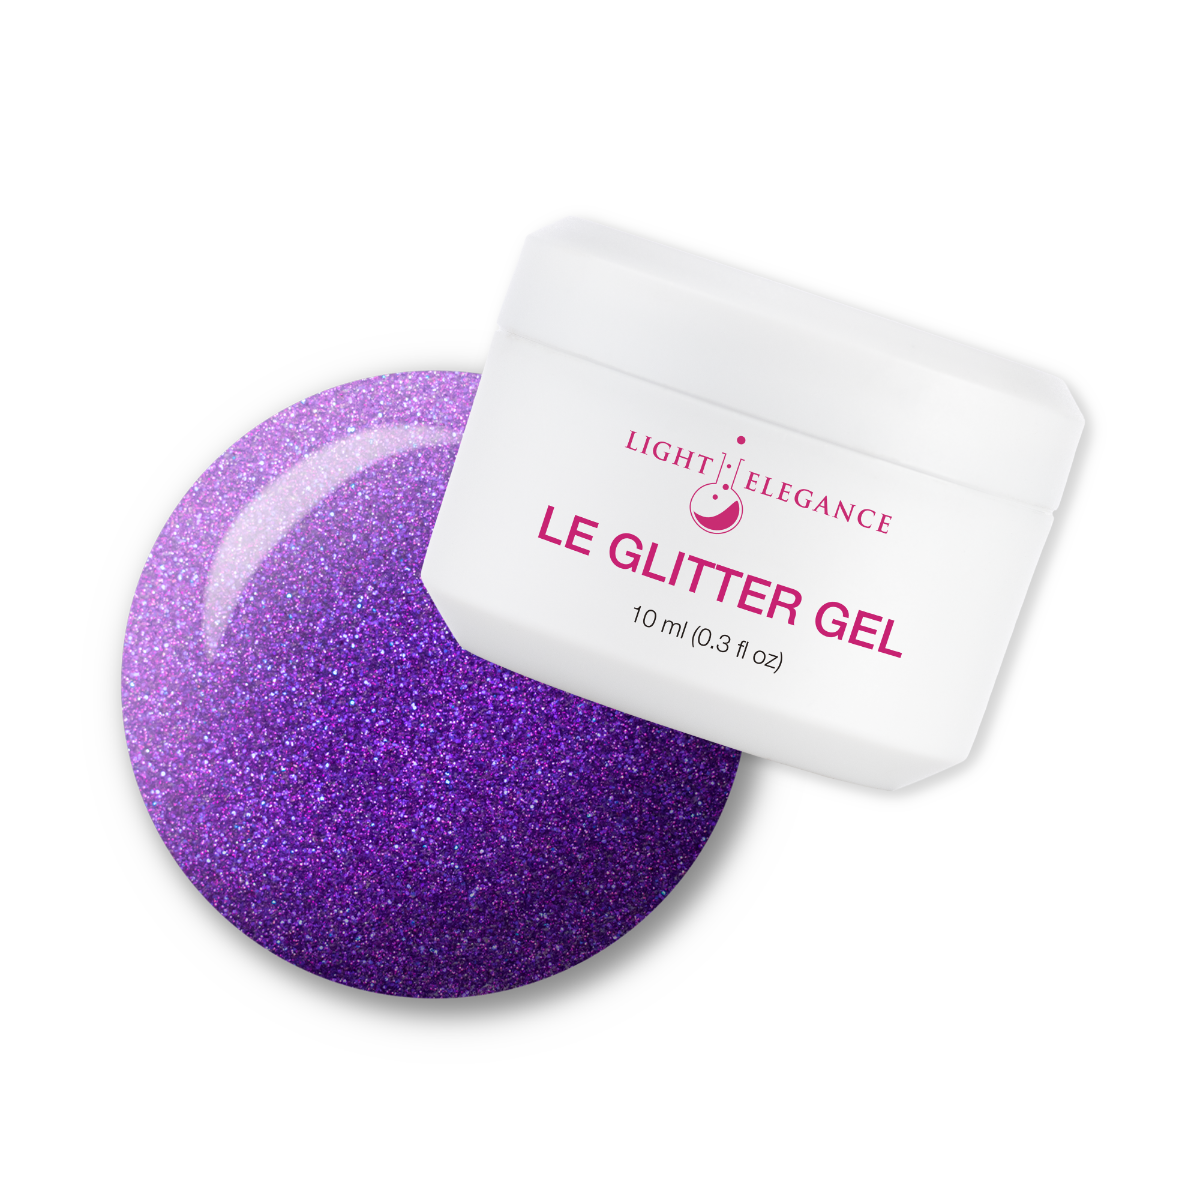 Light Elegance Glitter Gel - Amethyst Kiss - Creata Beauty - Professional Beauty Products